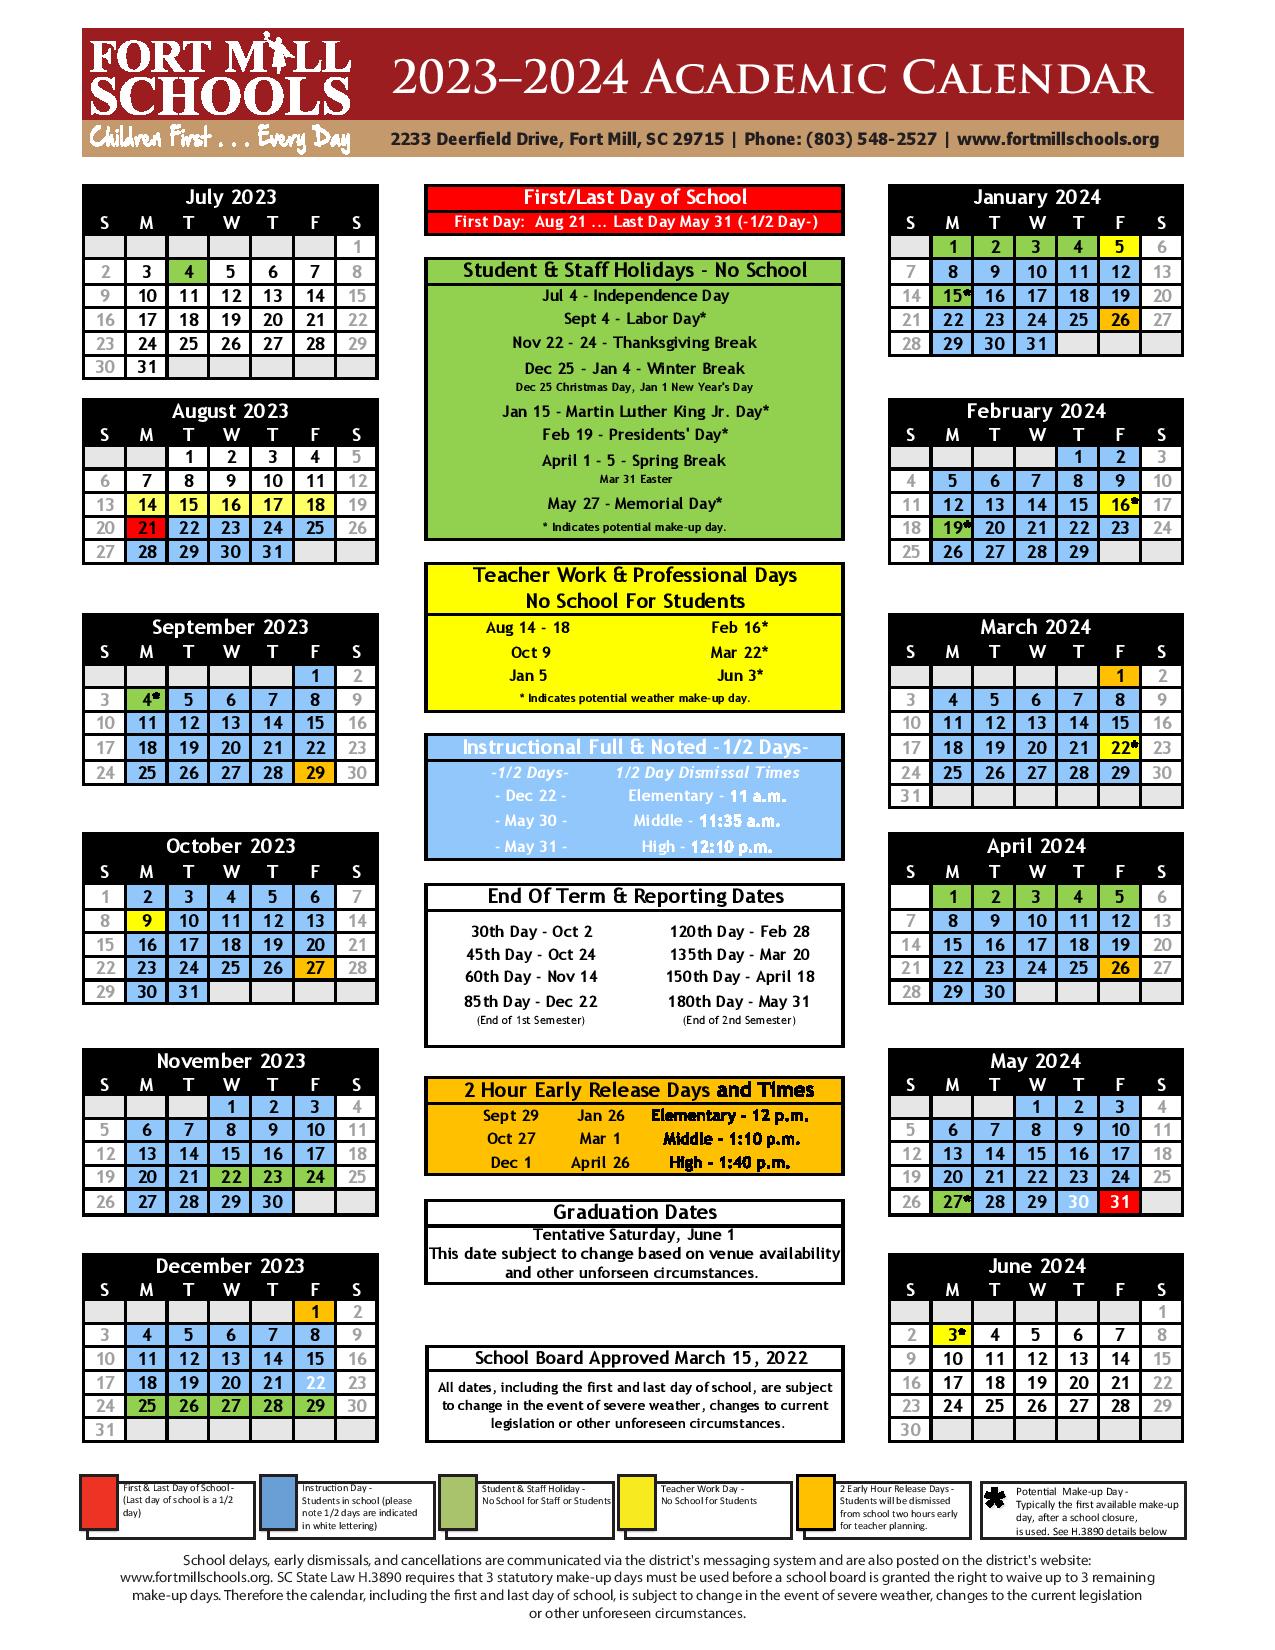 Fort Mill School District Calendar 2023 2024 in PDF